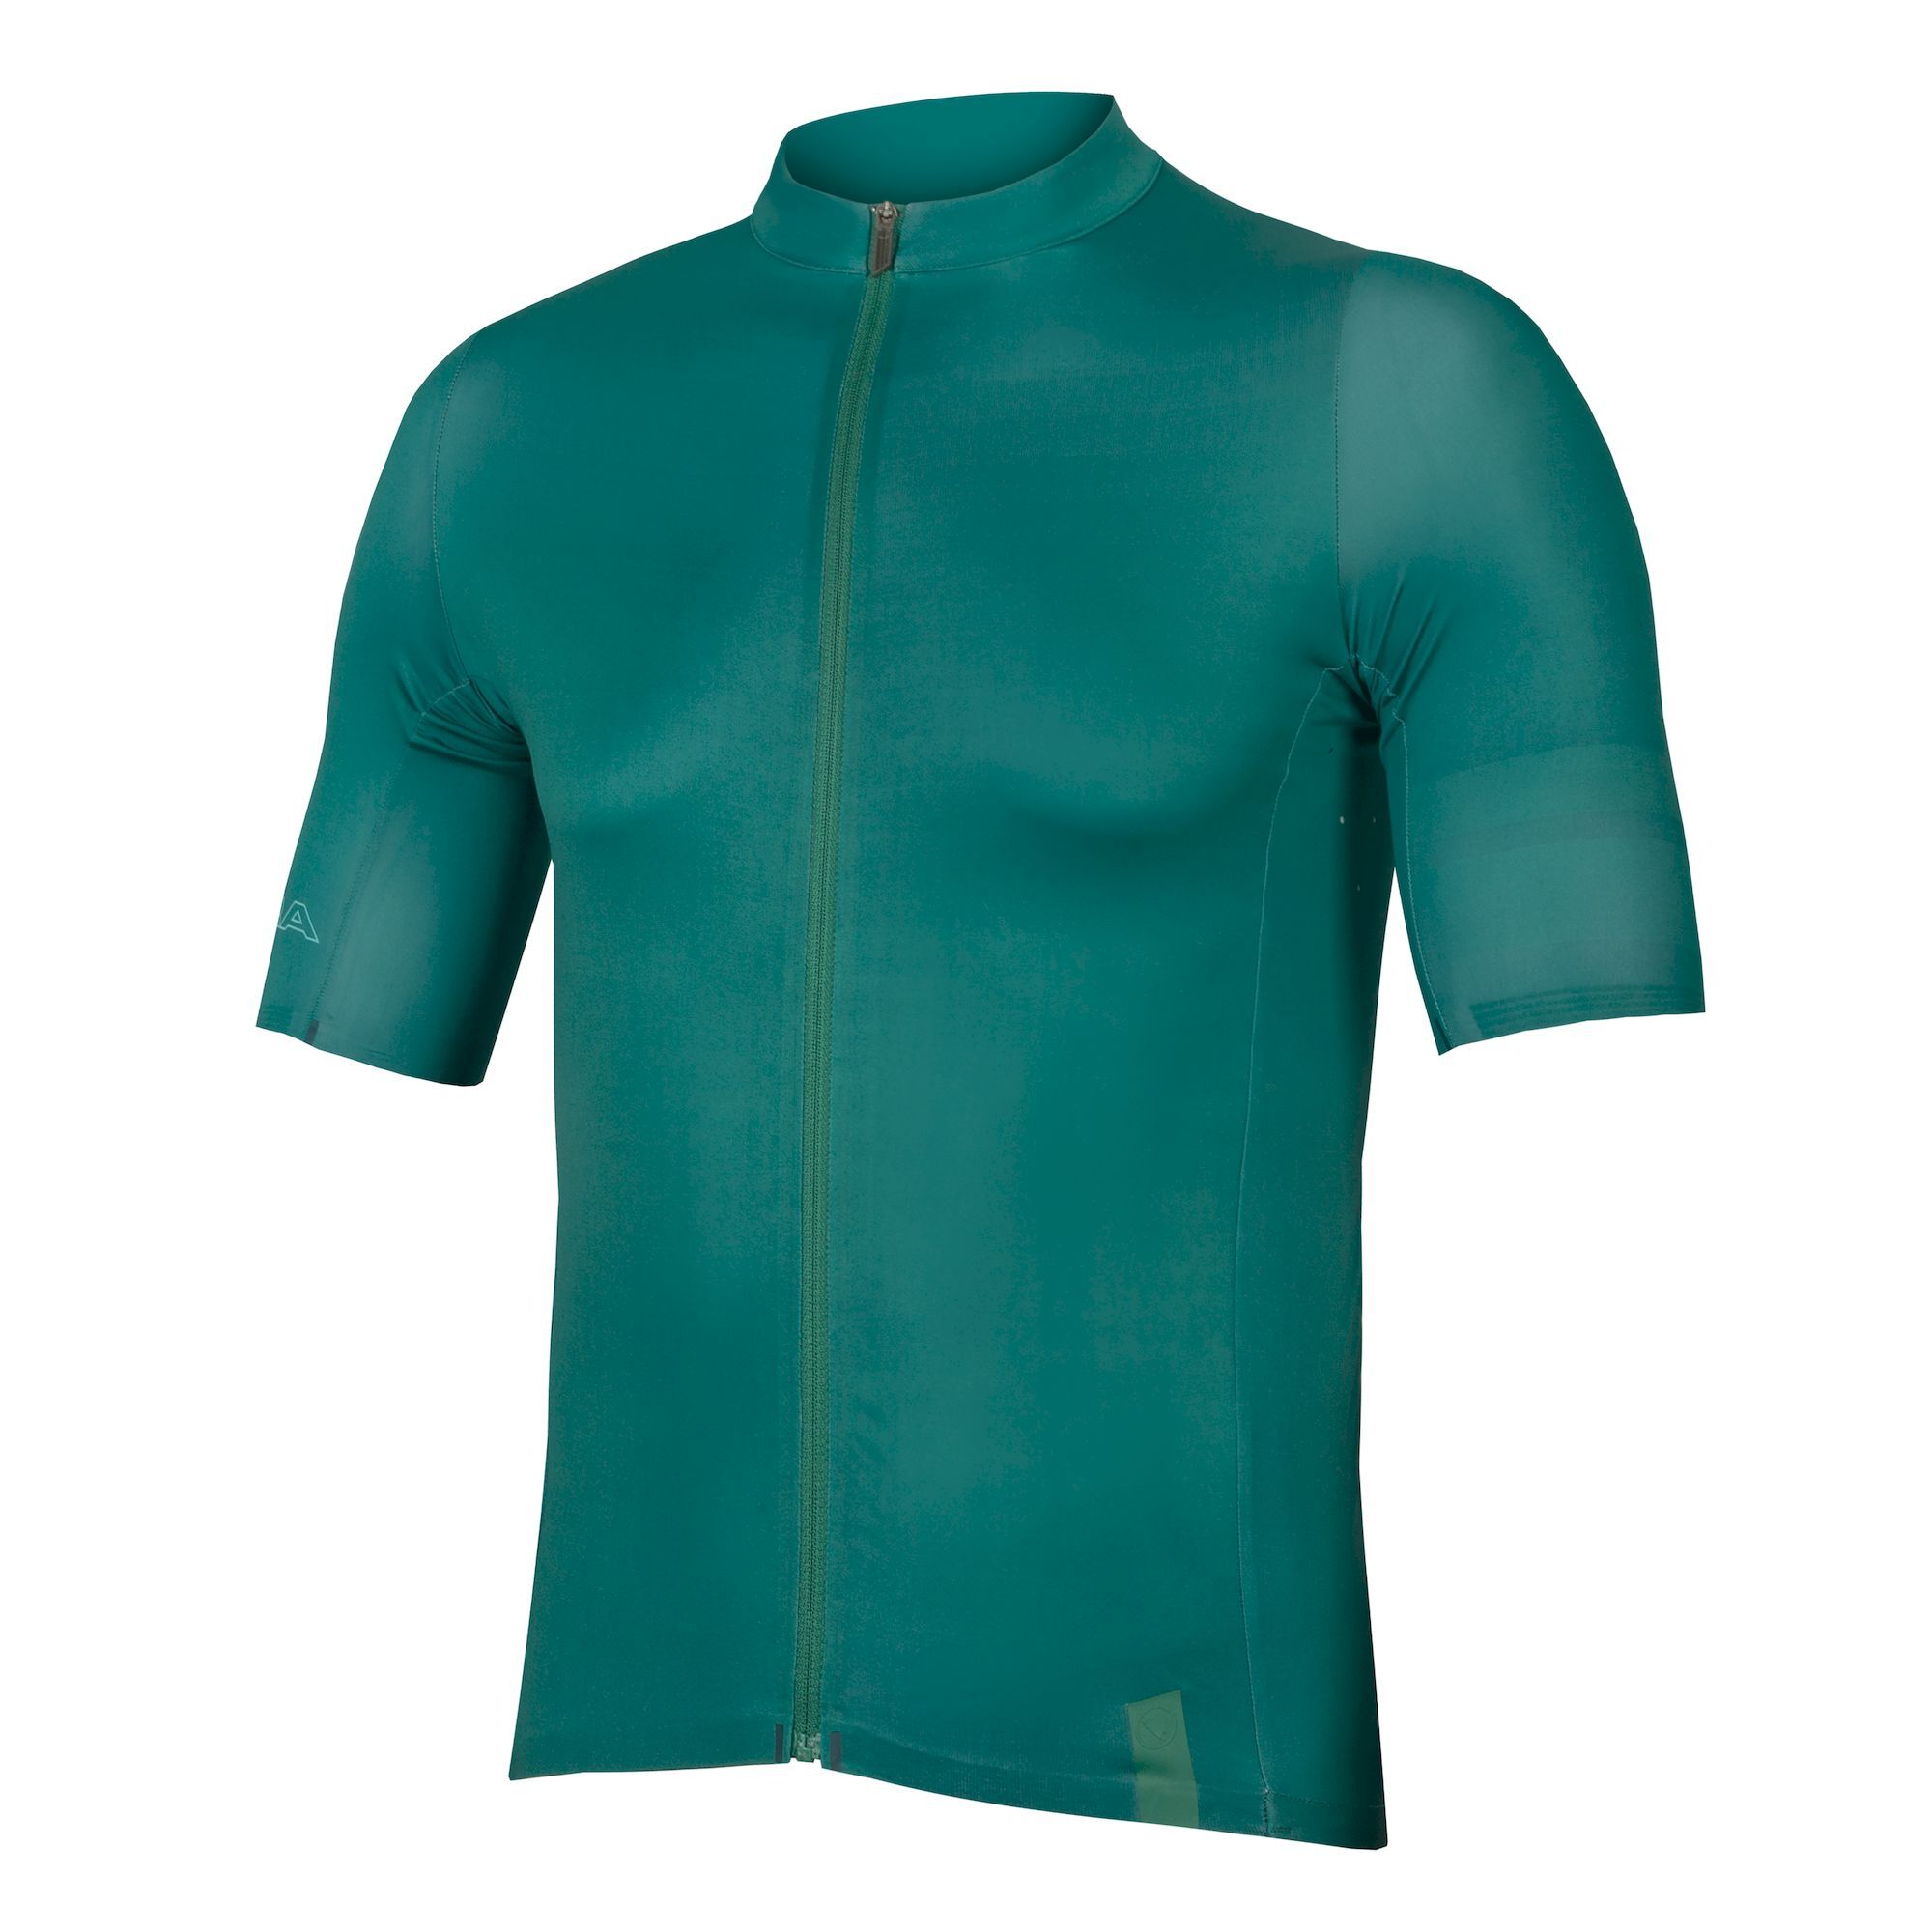 Pro SL S/S Jersey - Cycling jersey - Men's